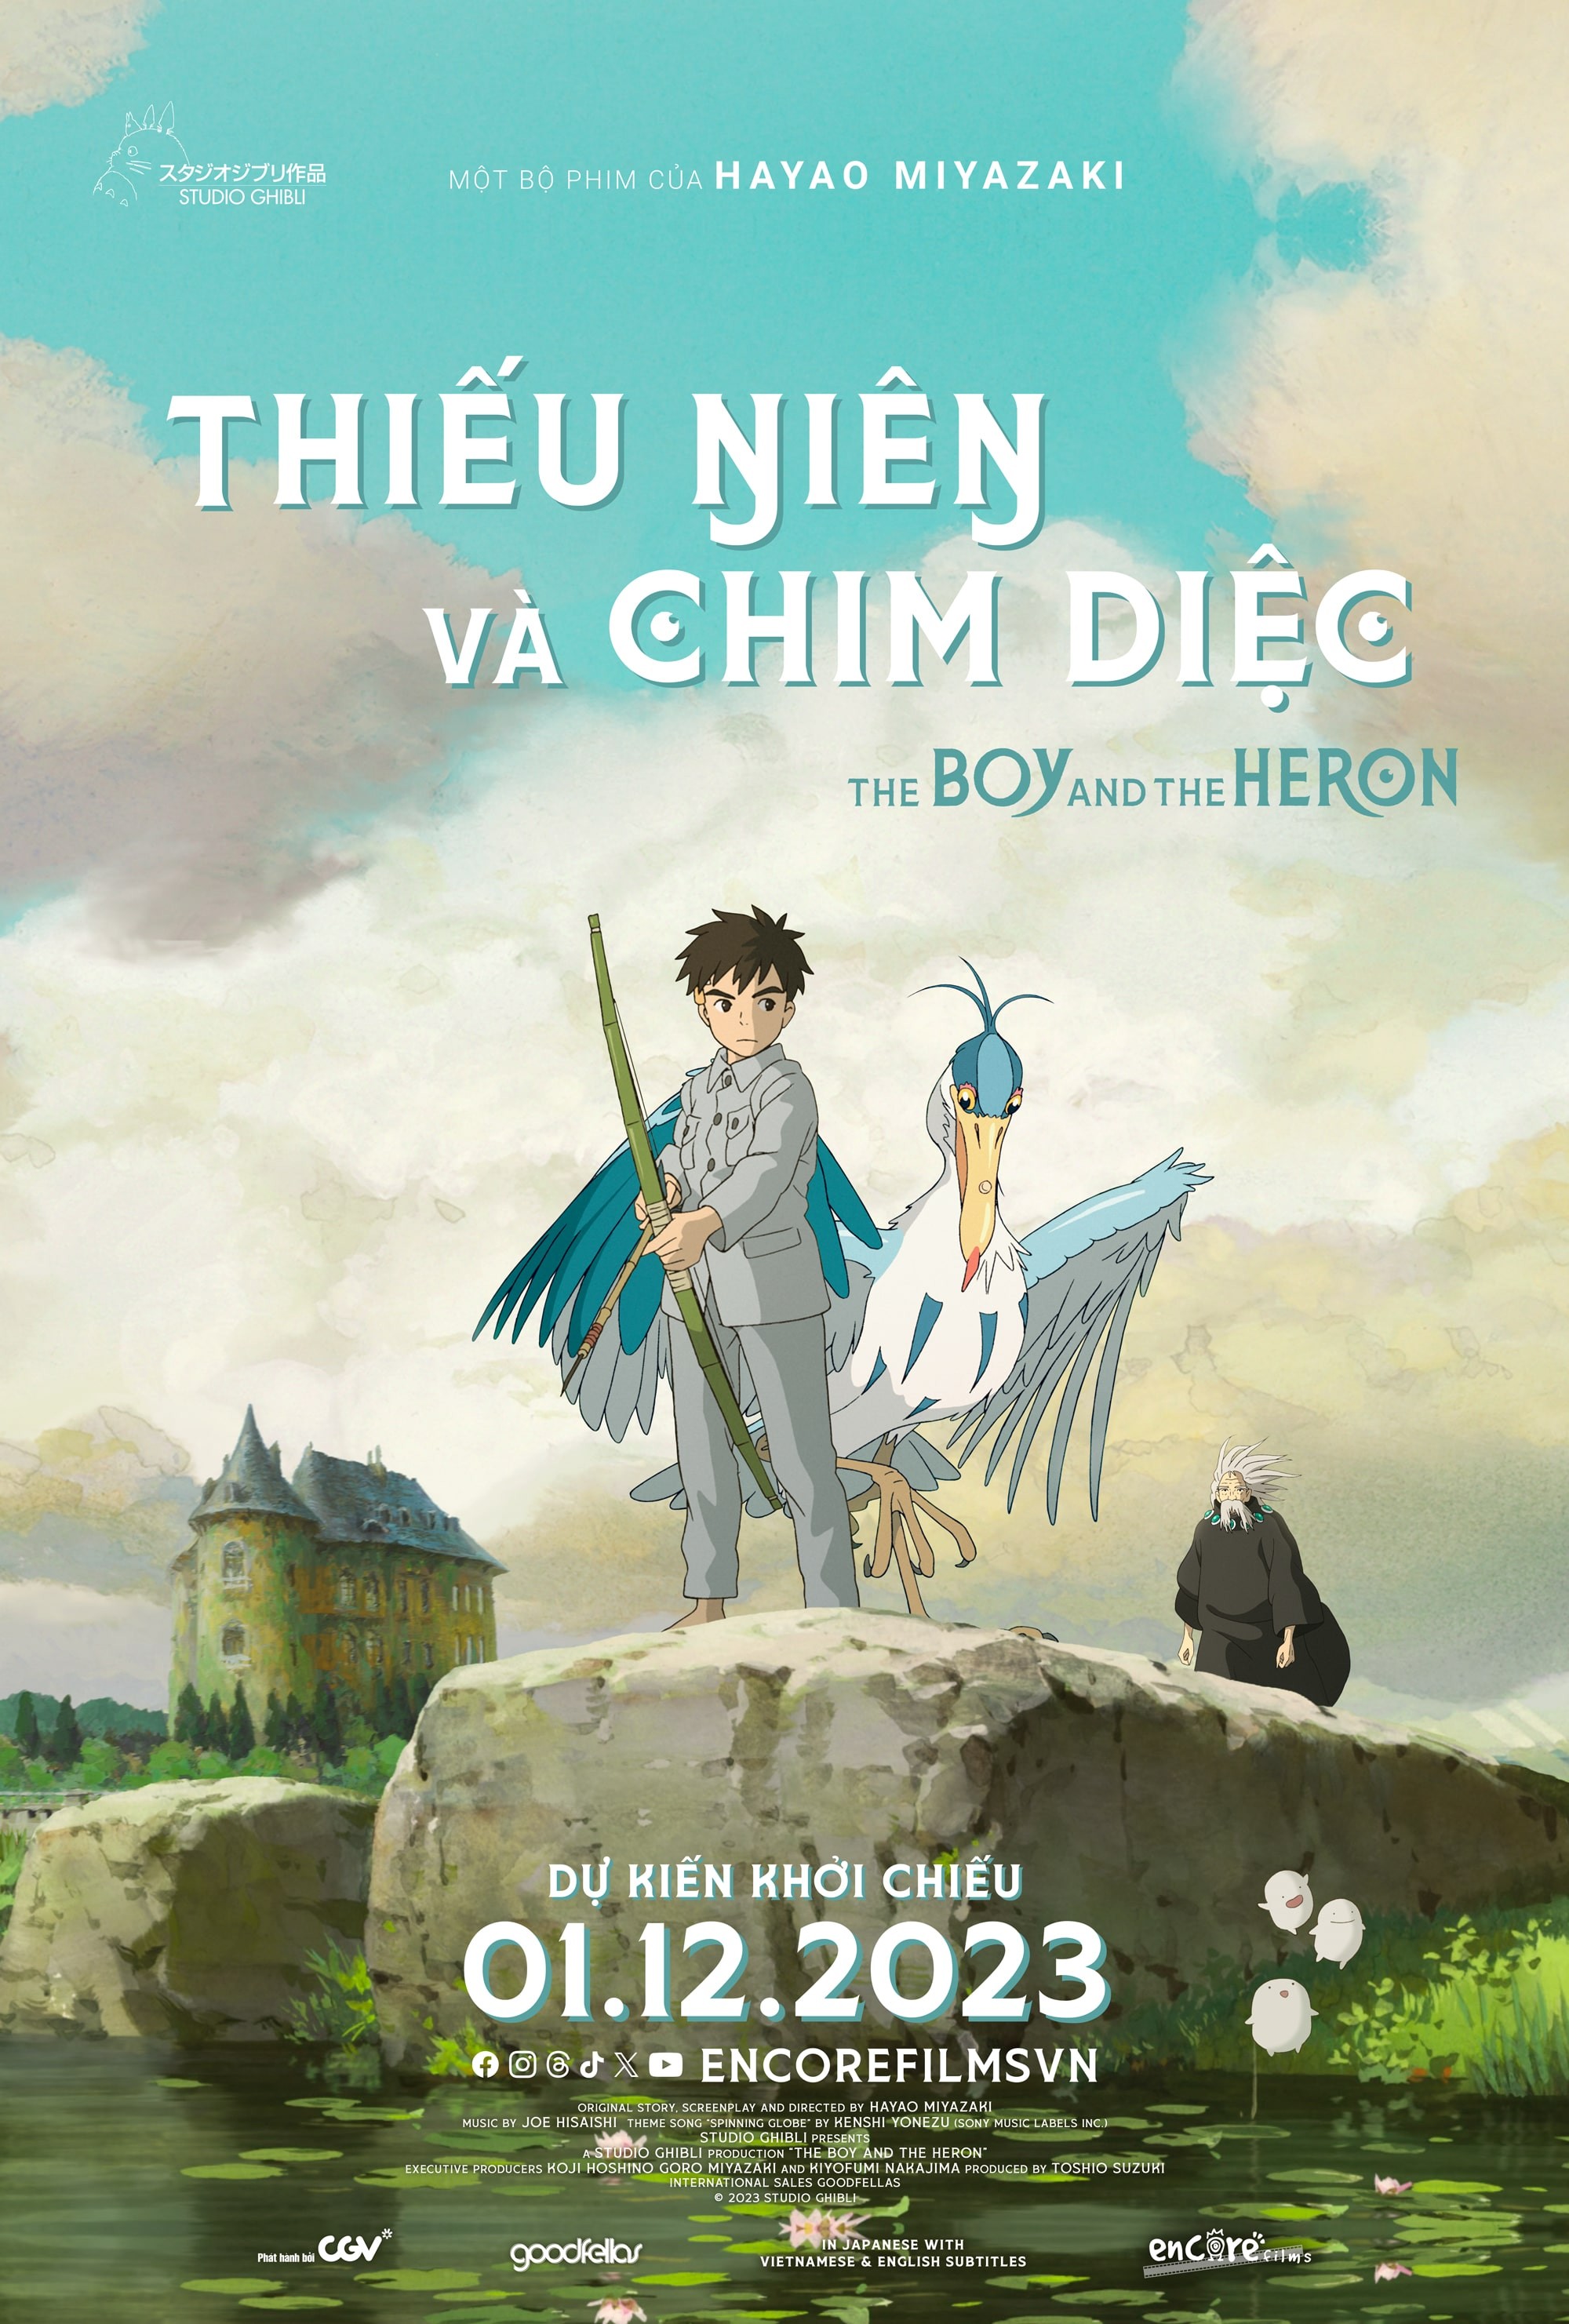 tbath-vietnam-poster-french-version-27x40in-a-min-1700466292.jpg